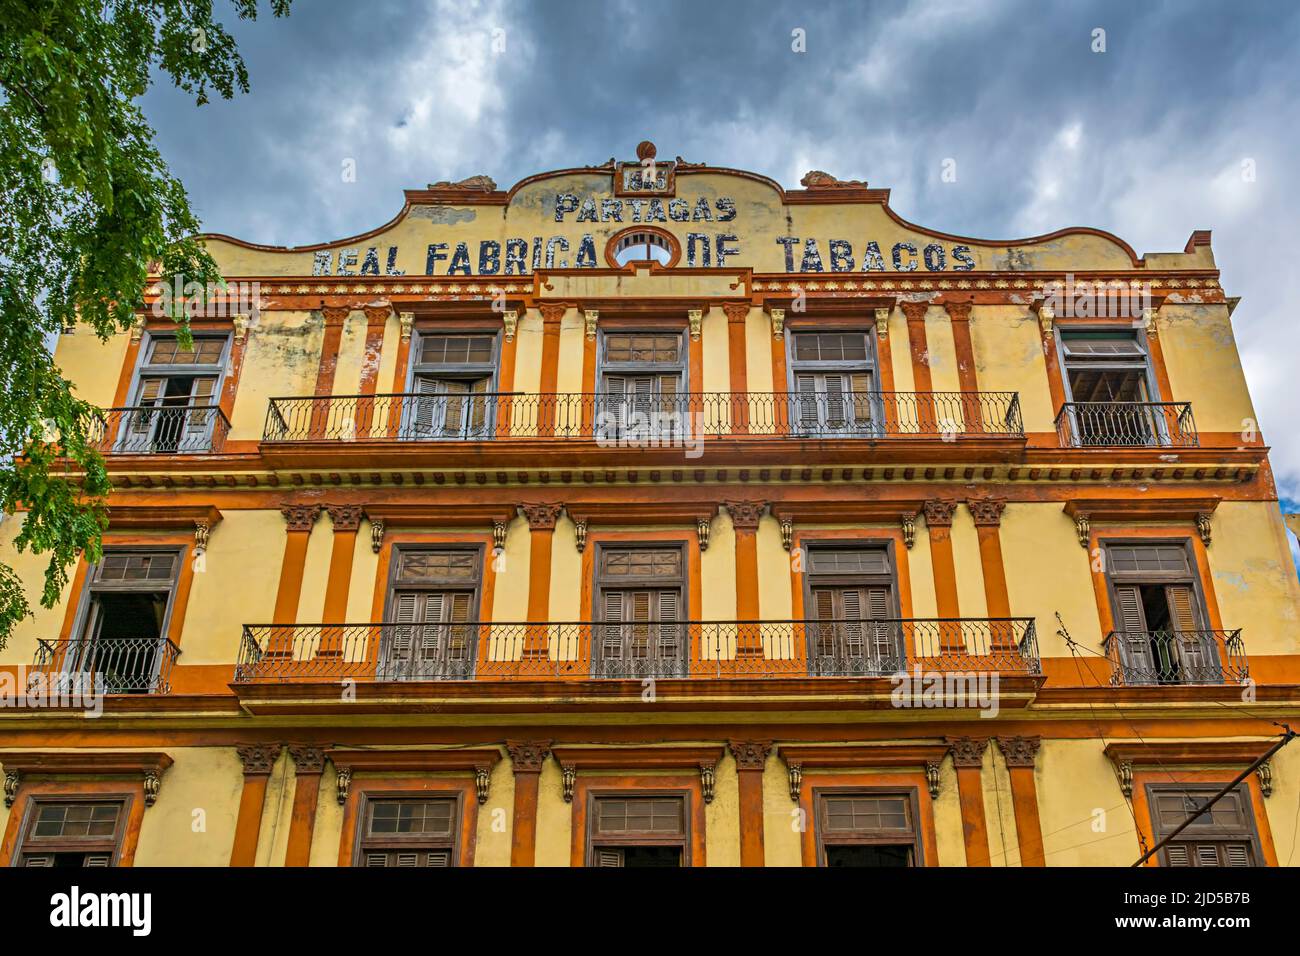 Real Fábrica de Tabacos Partagás house in Old Havana, Cuba Stock Photo